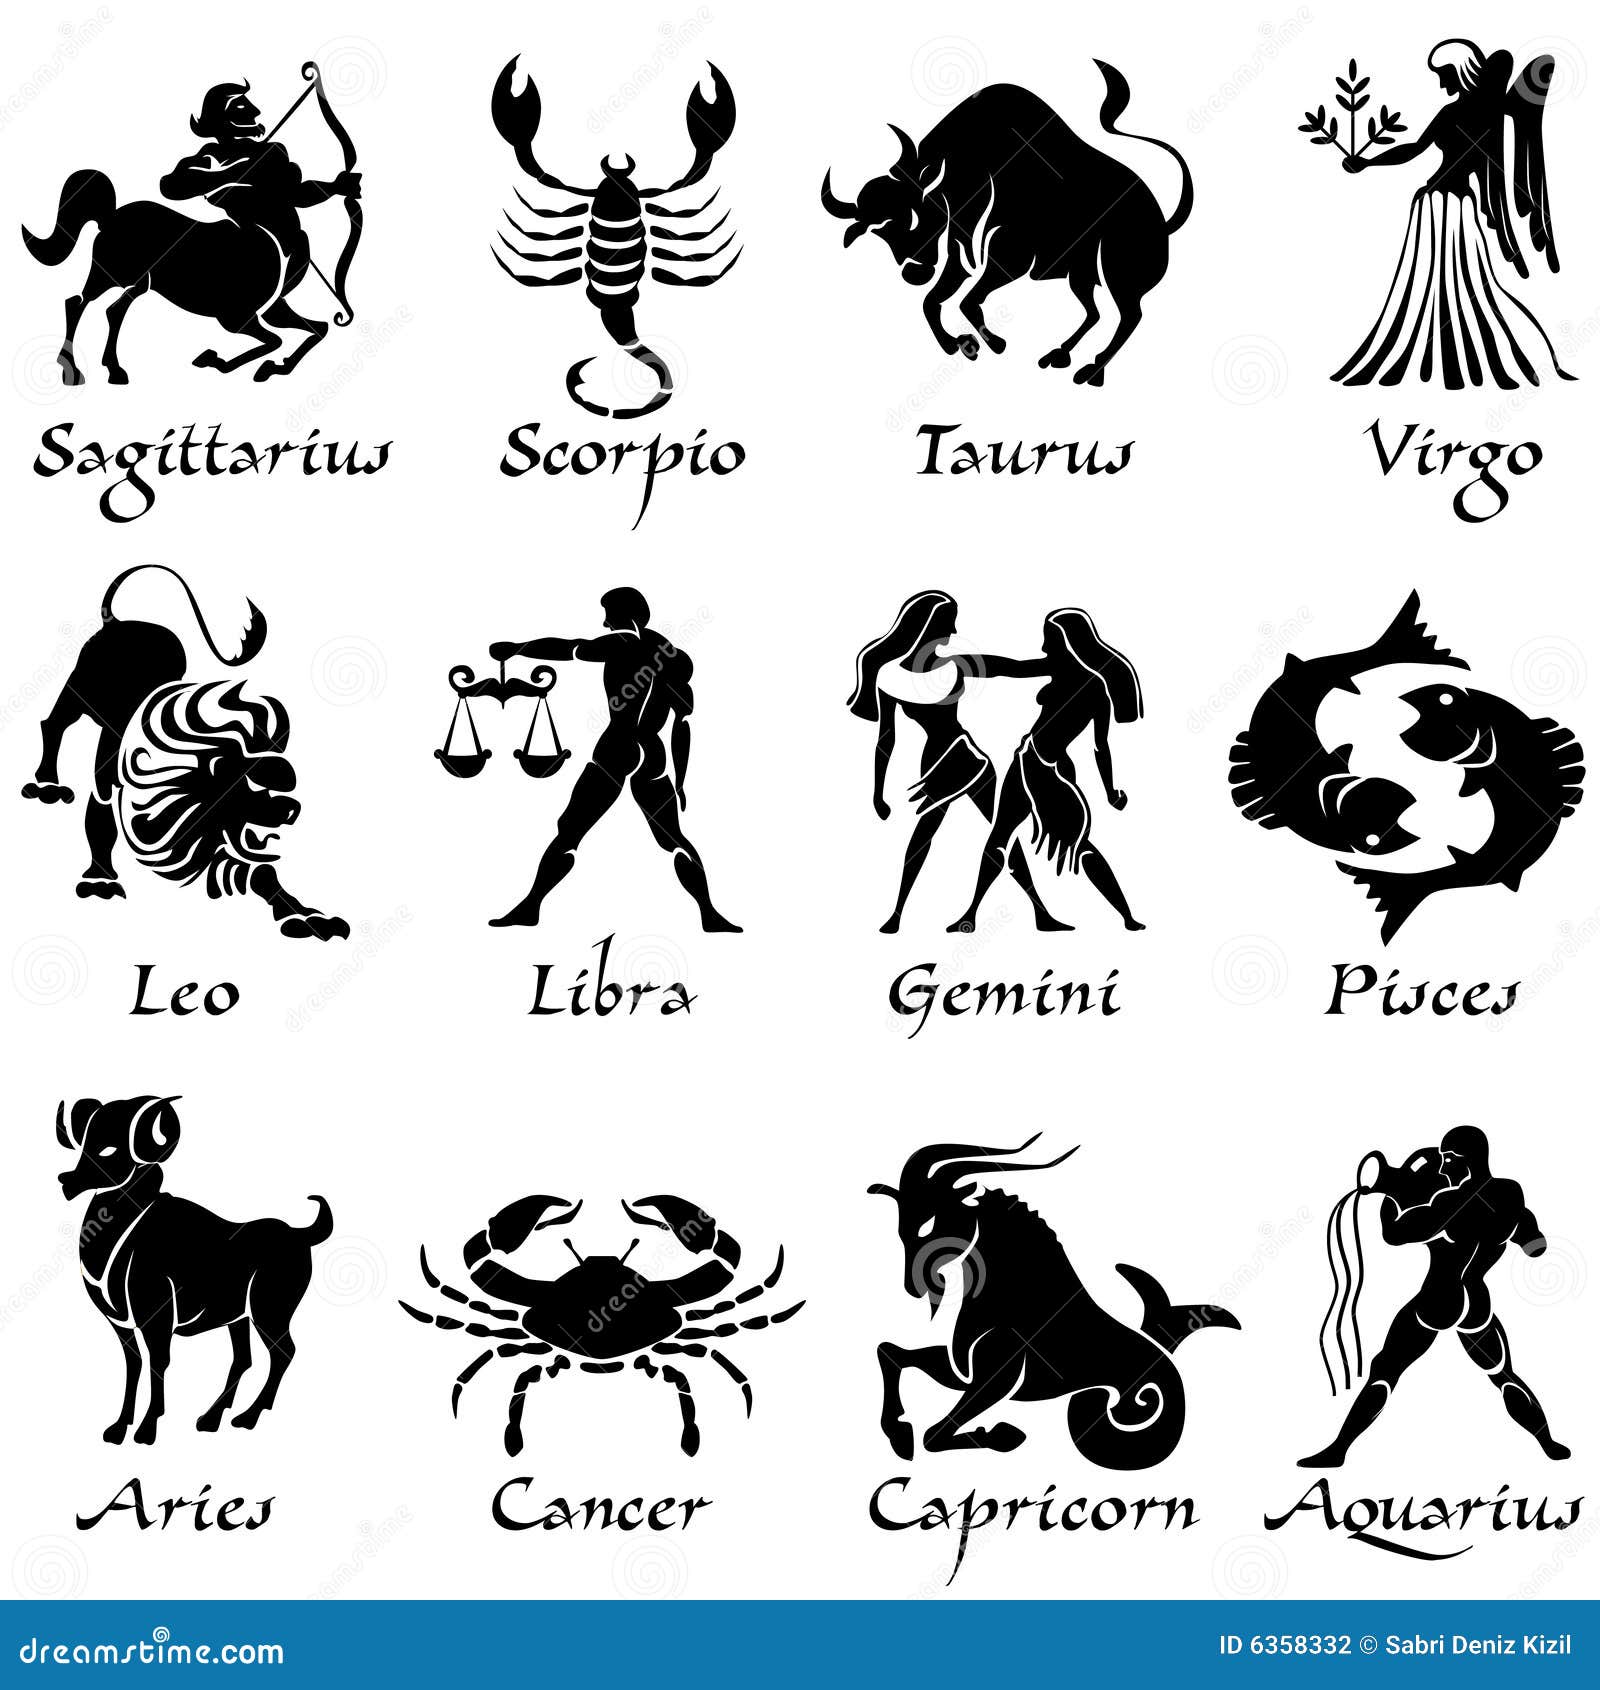 zodiac-sign-vector-6358332.jpg